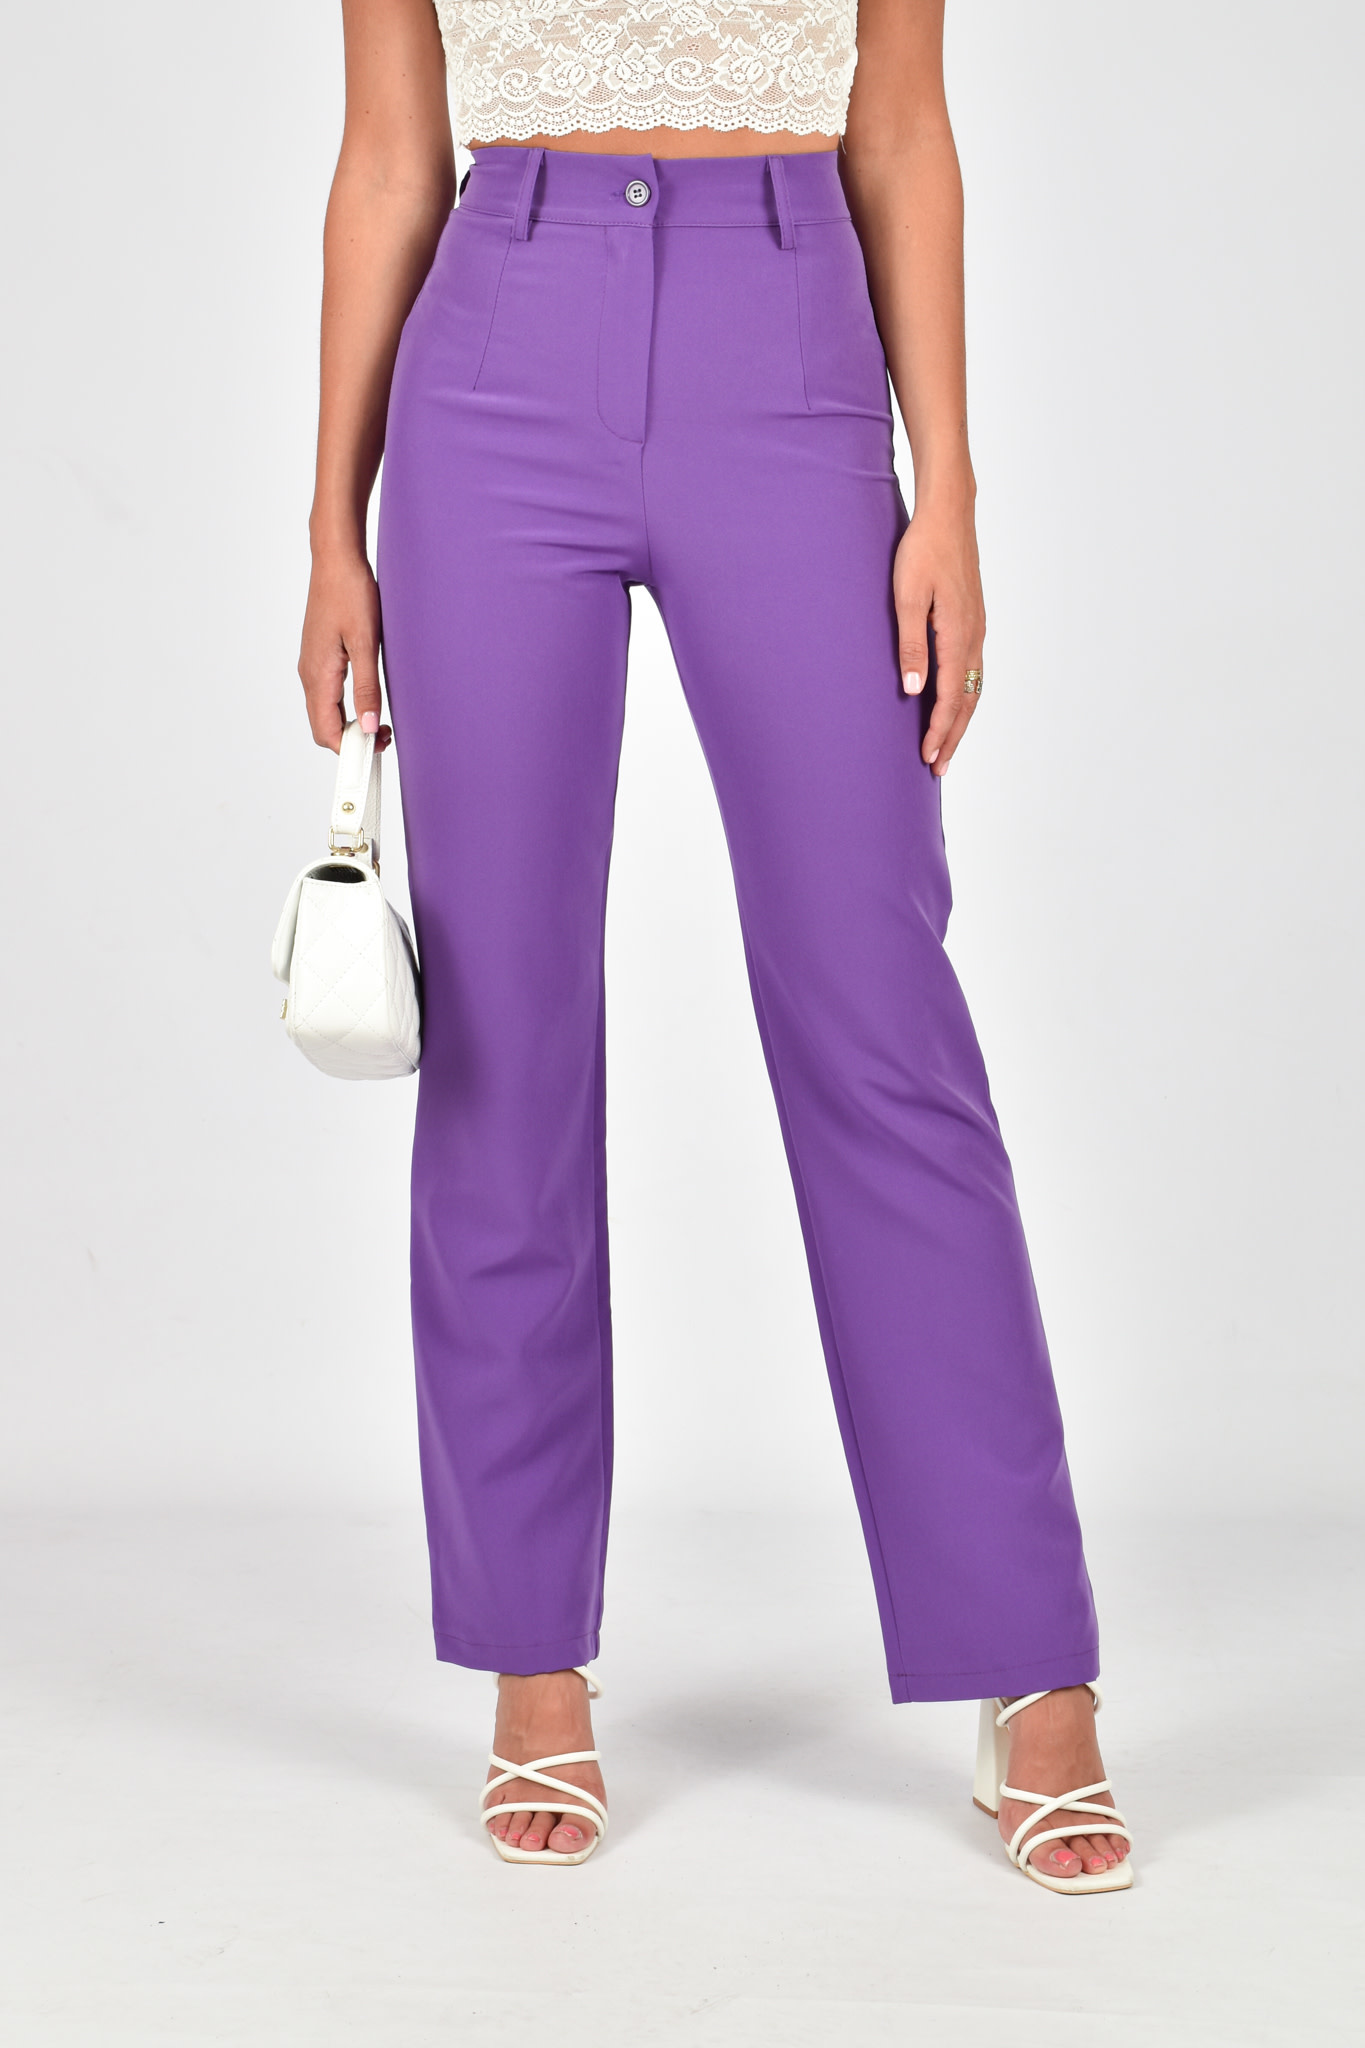 Romy pantalon purple